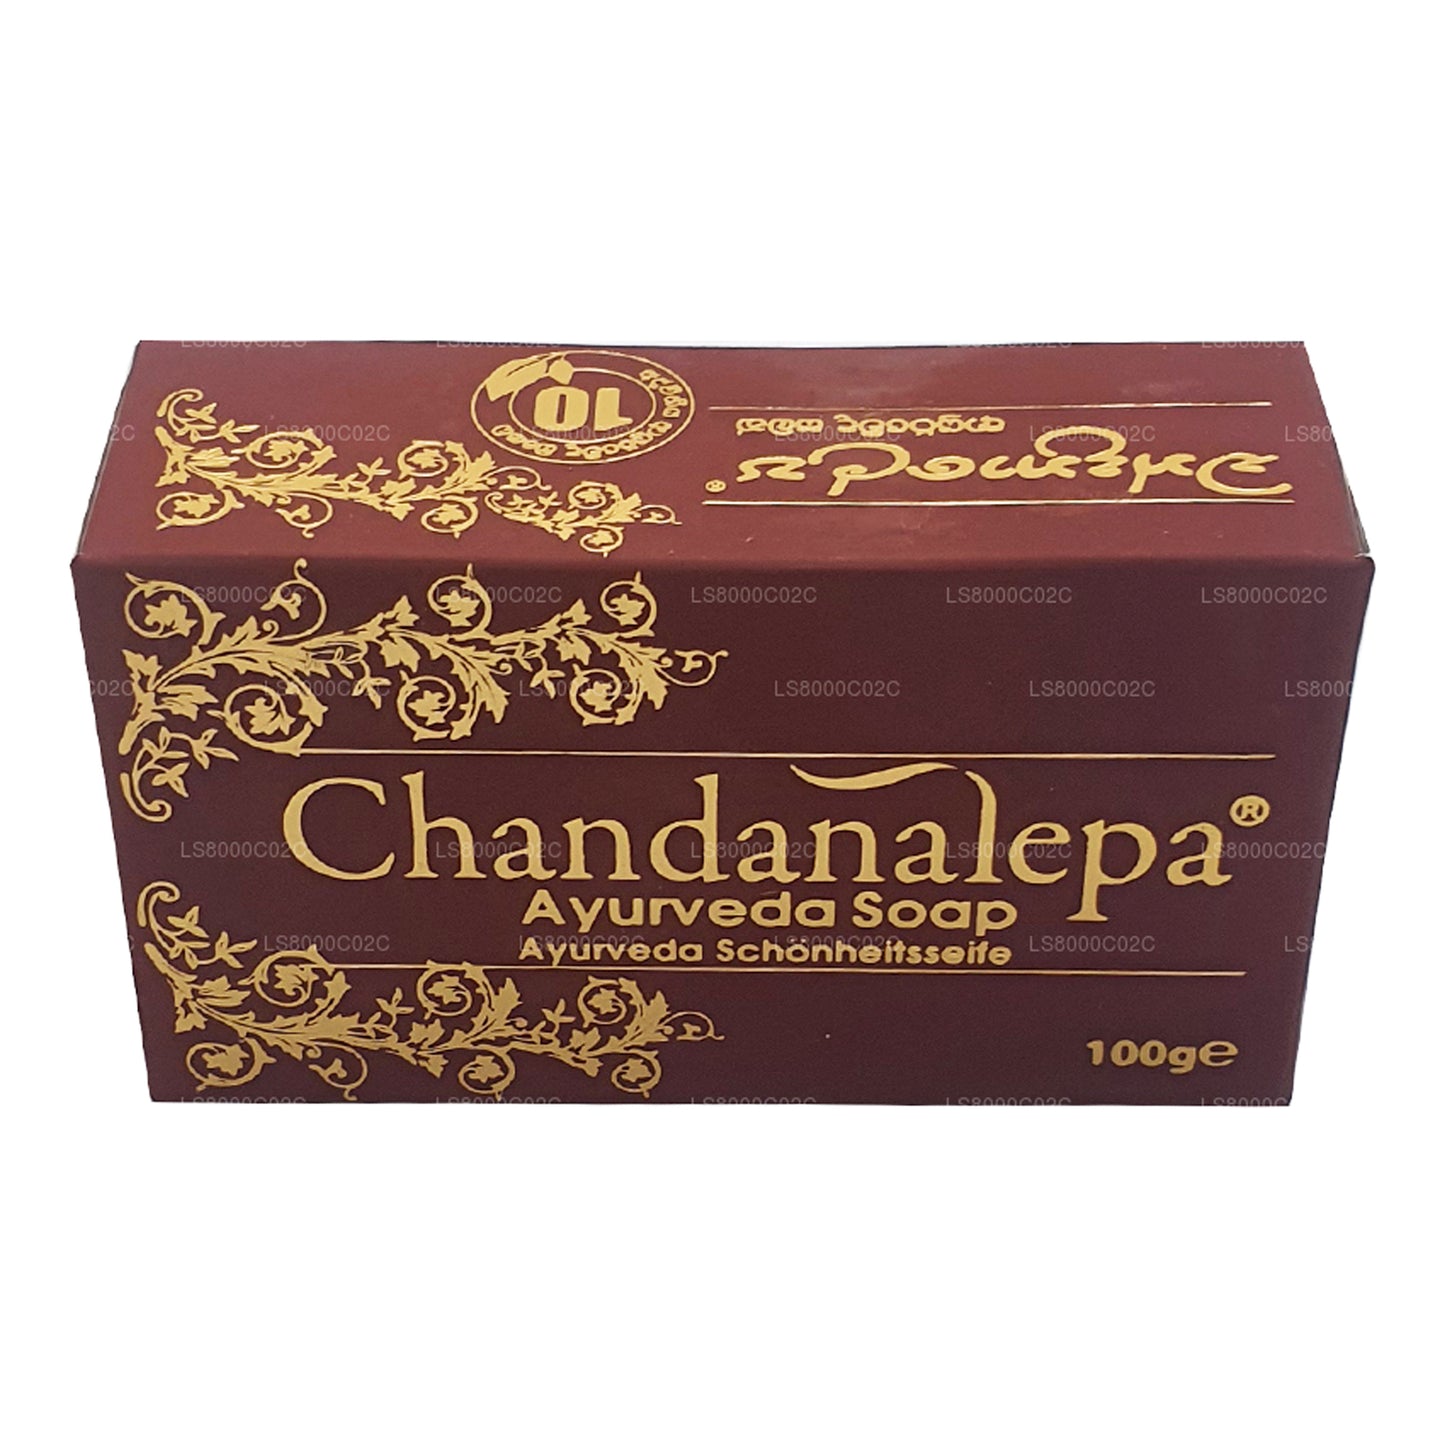 Chandanalepa Ayurveda Beauty Bar (100g)